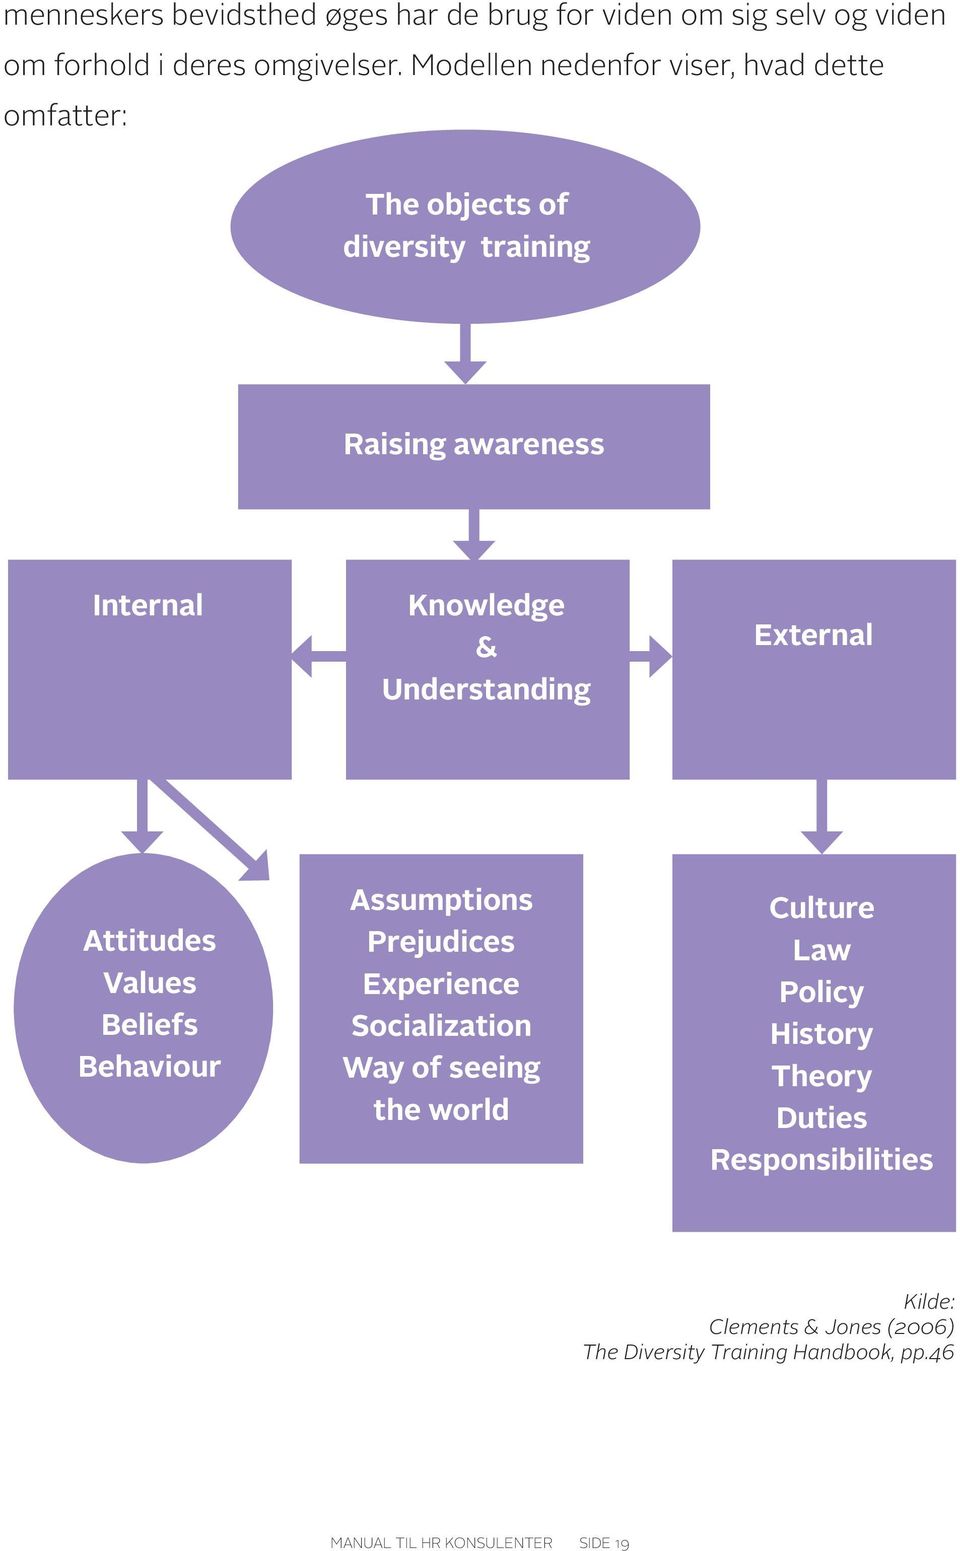 Understanding External Attitudes Values Beliefs Behaviour Assumptions Prejudices Experience Socialization Way of seeing the